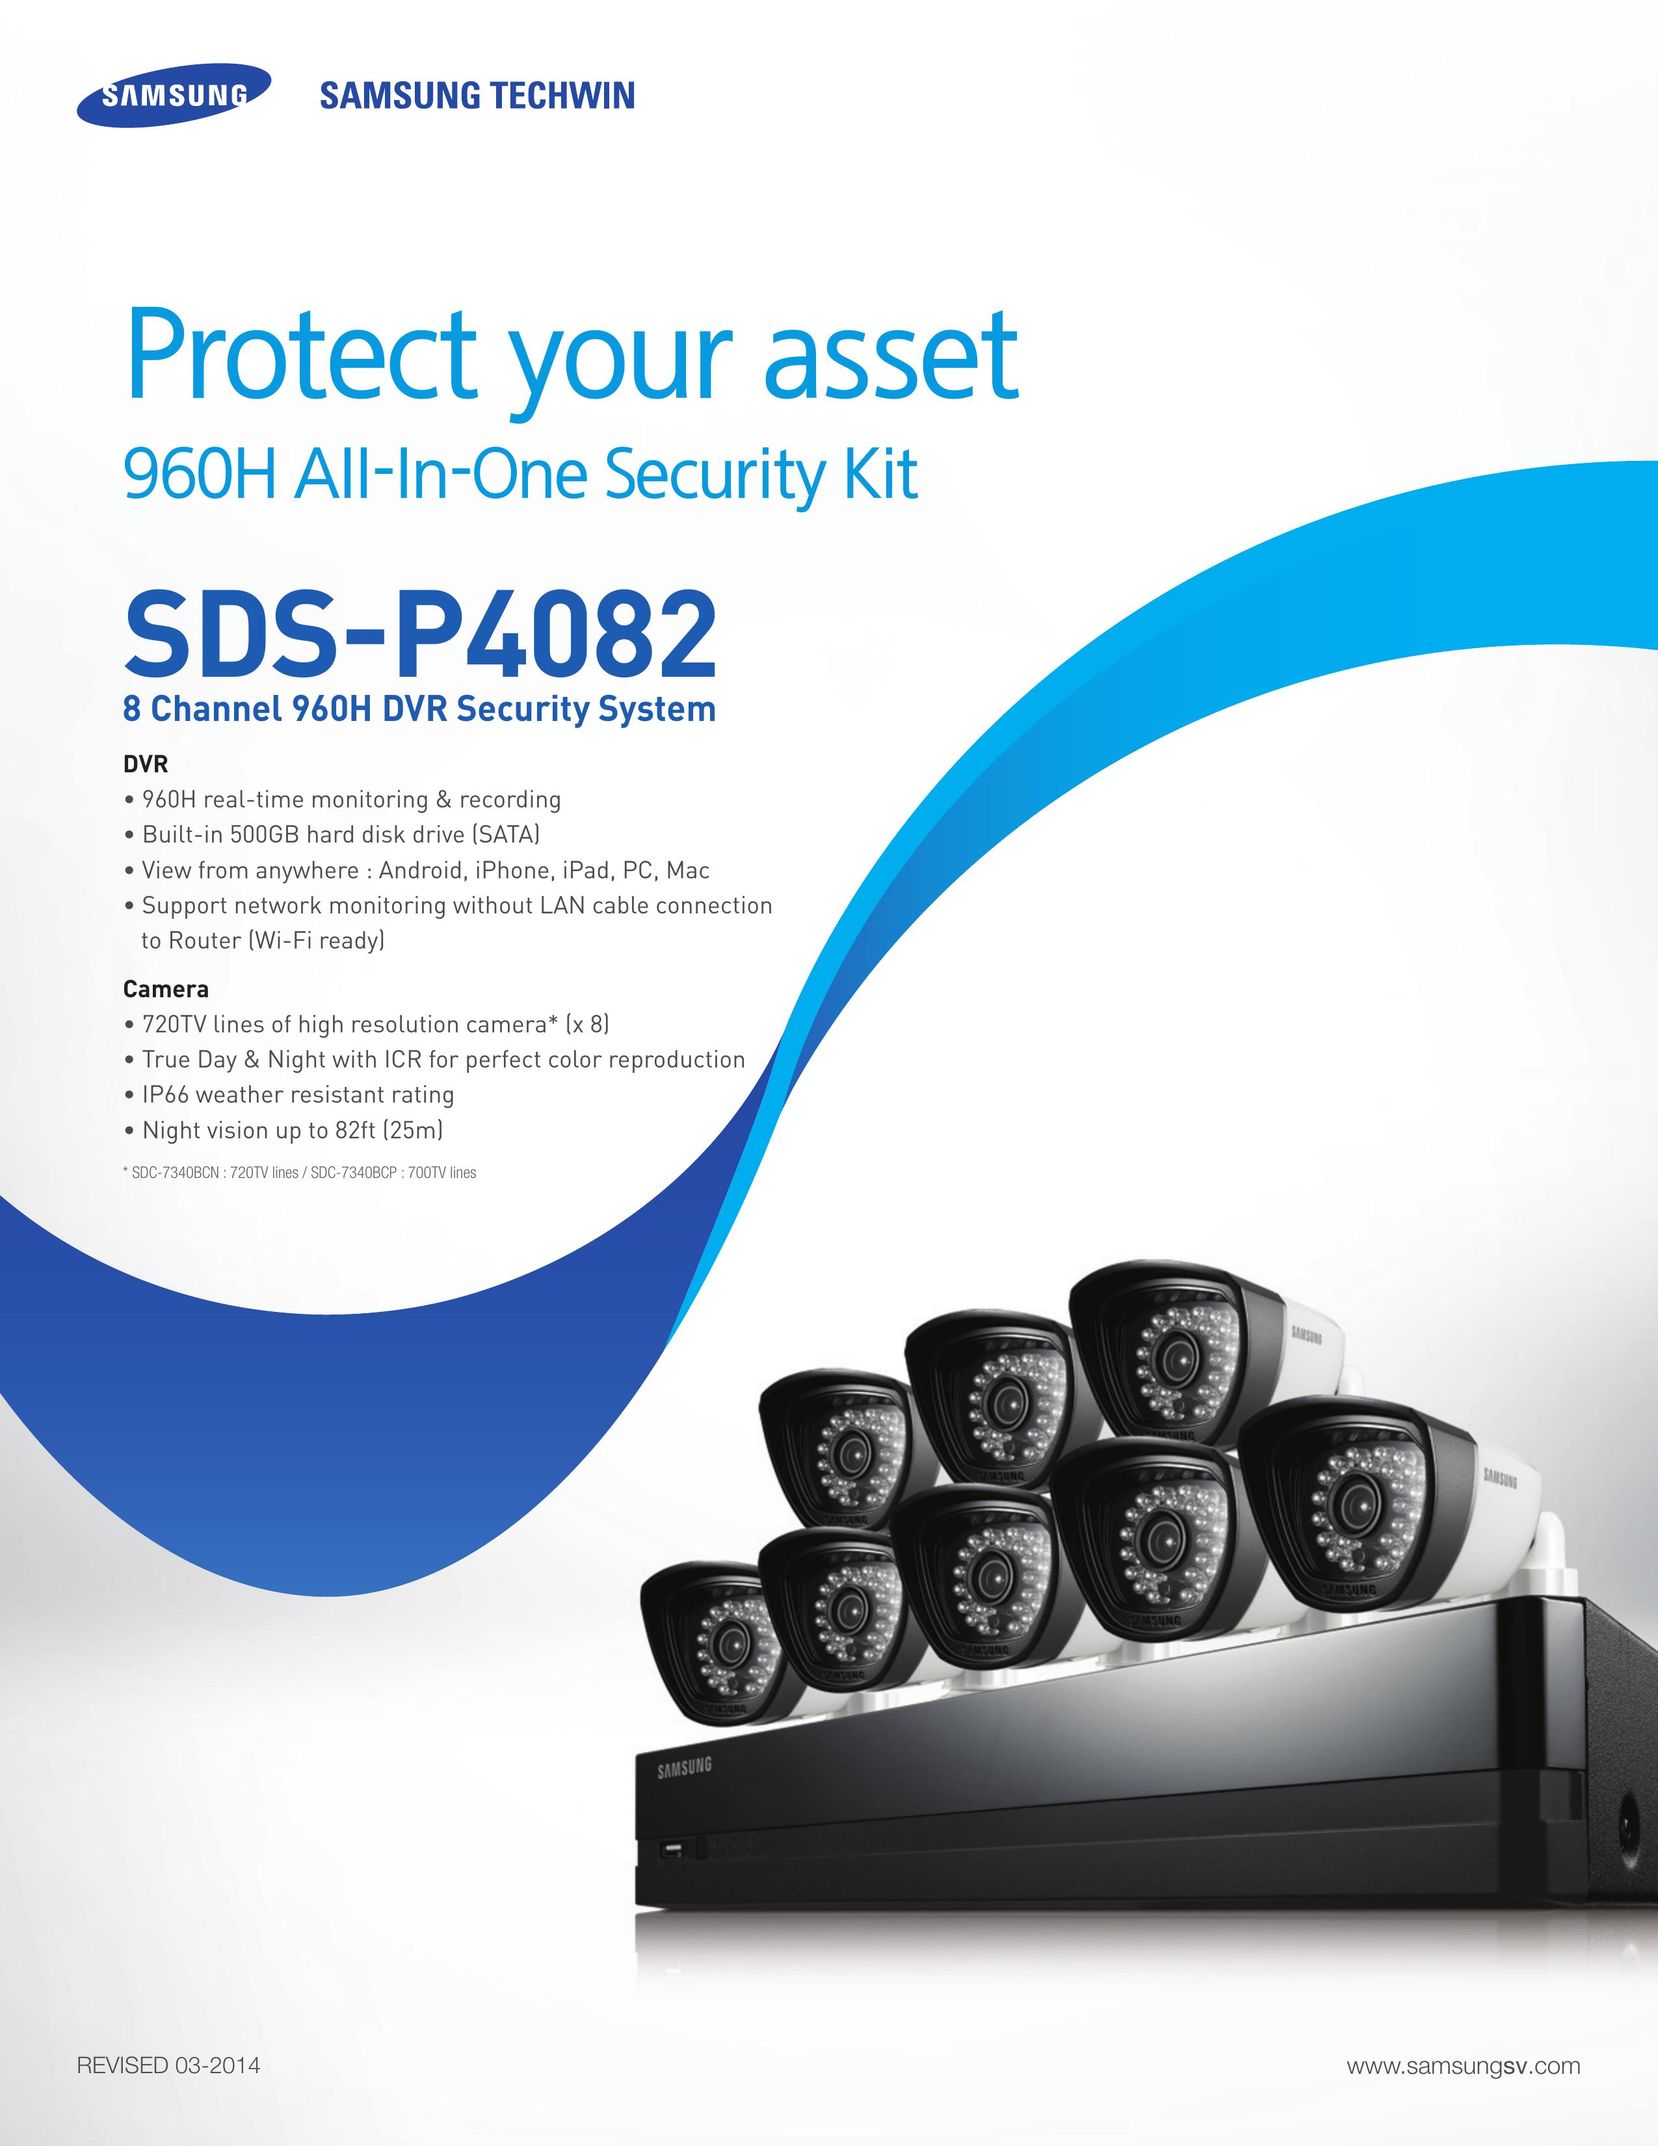 Samsung SDS-P4082 Home Security System User Manual